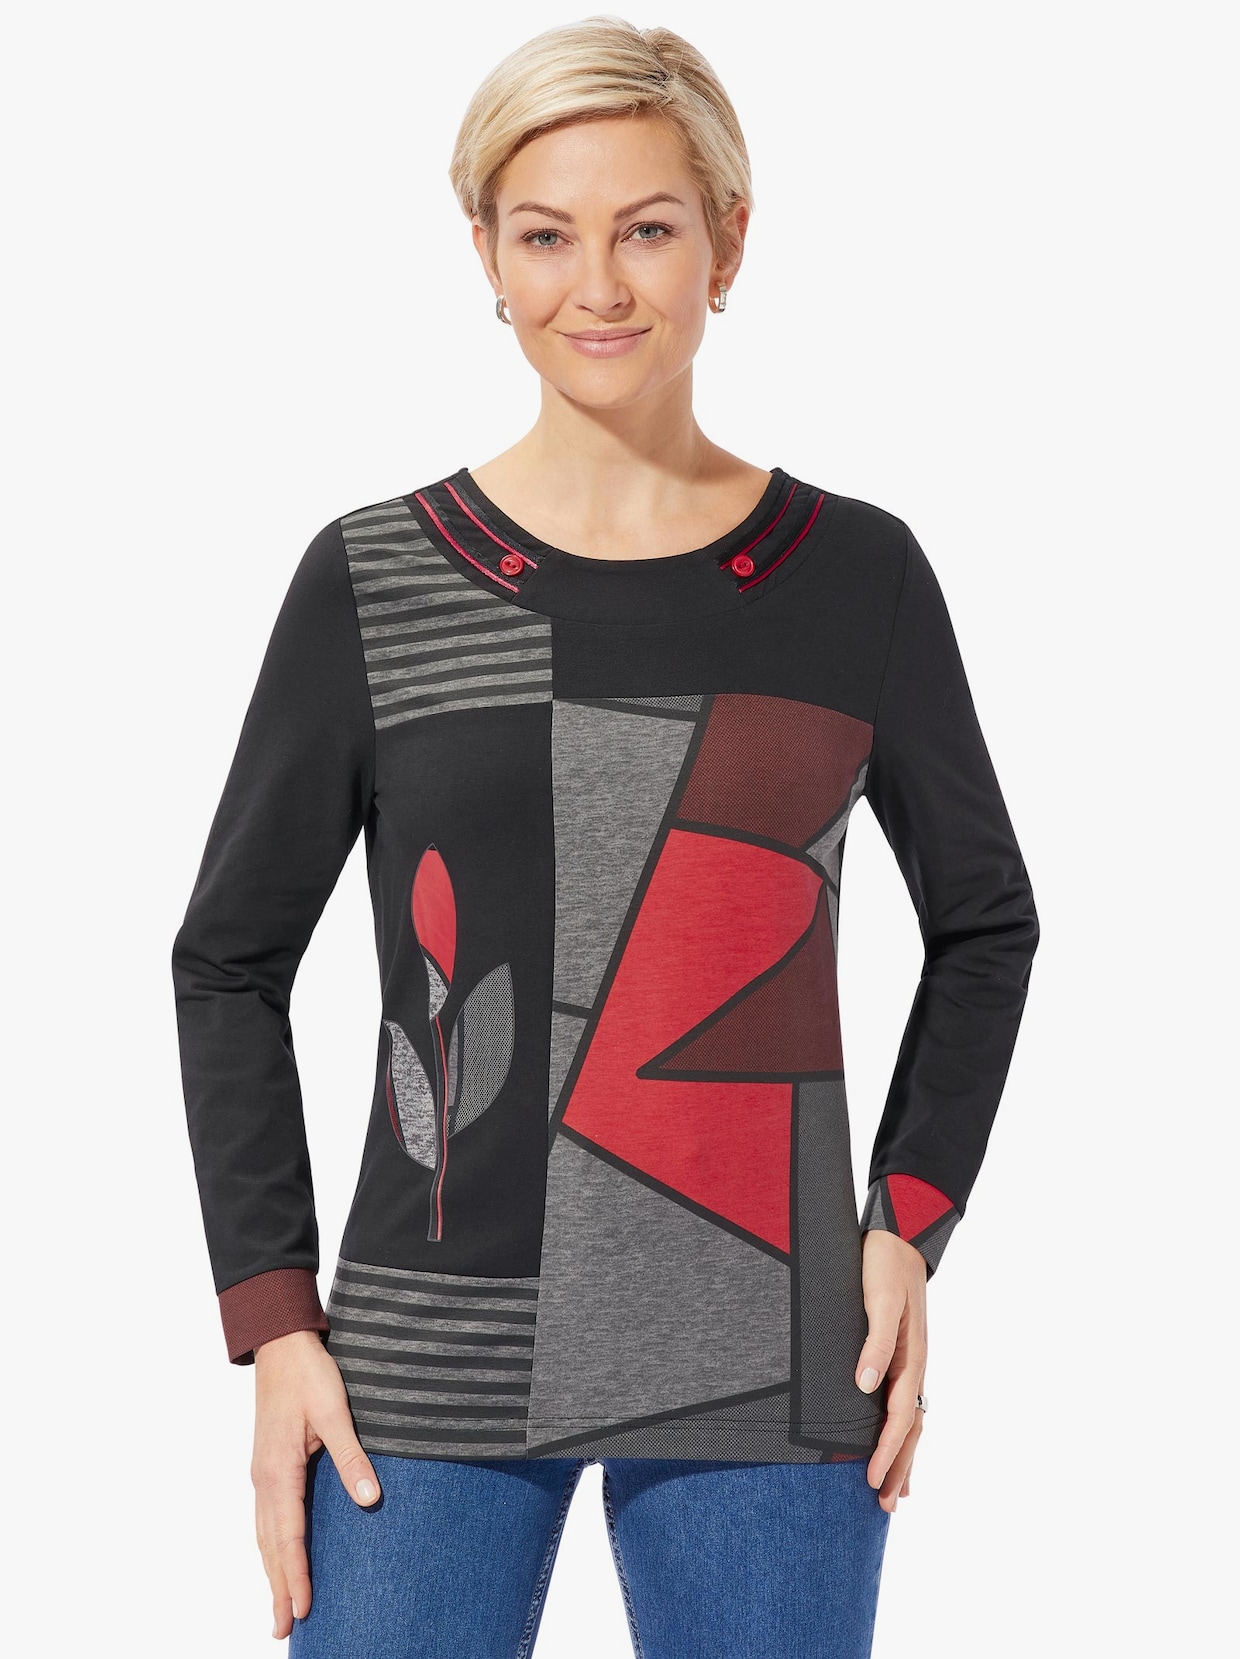 Tričko s kulatým výstřihem - černá-červená vzor